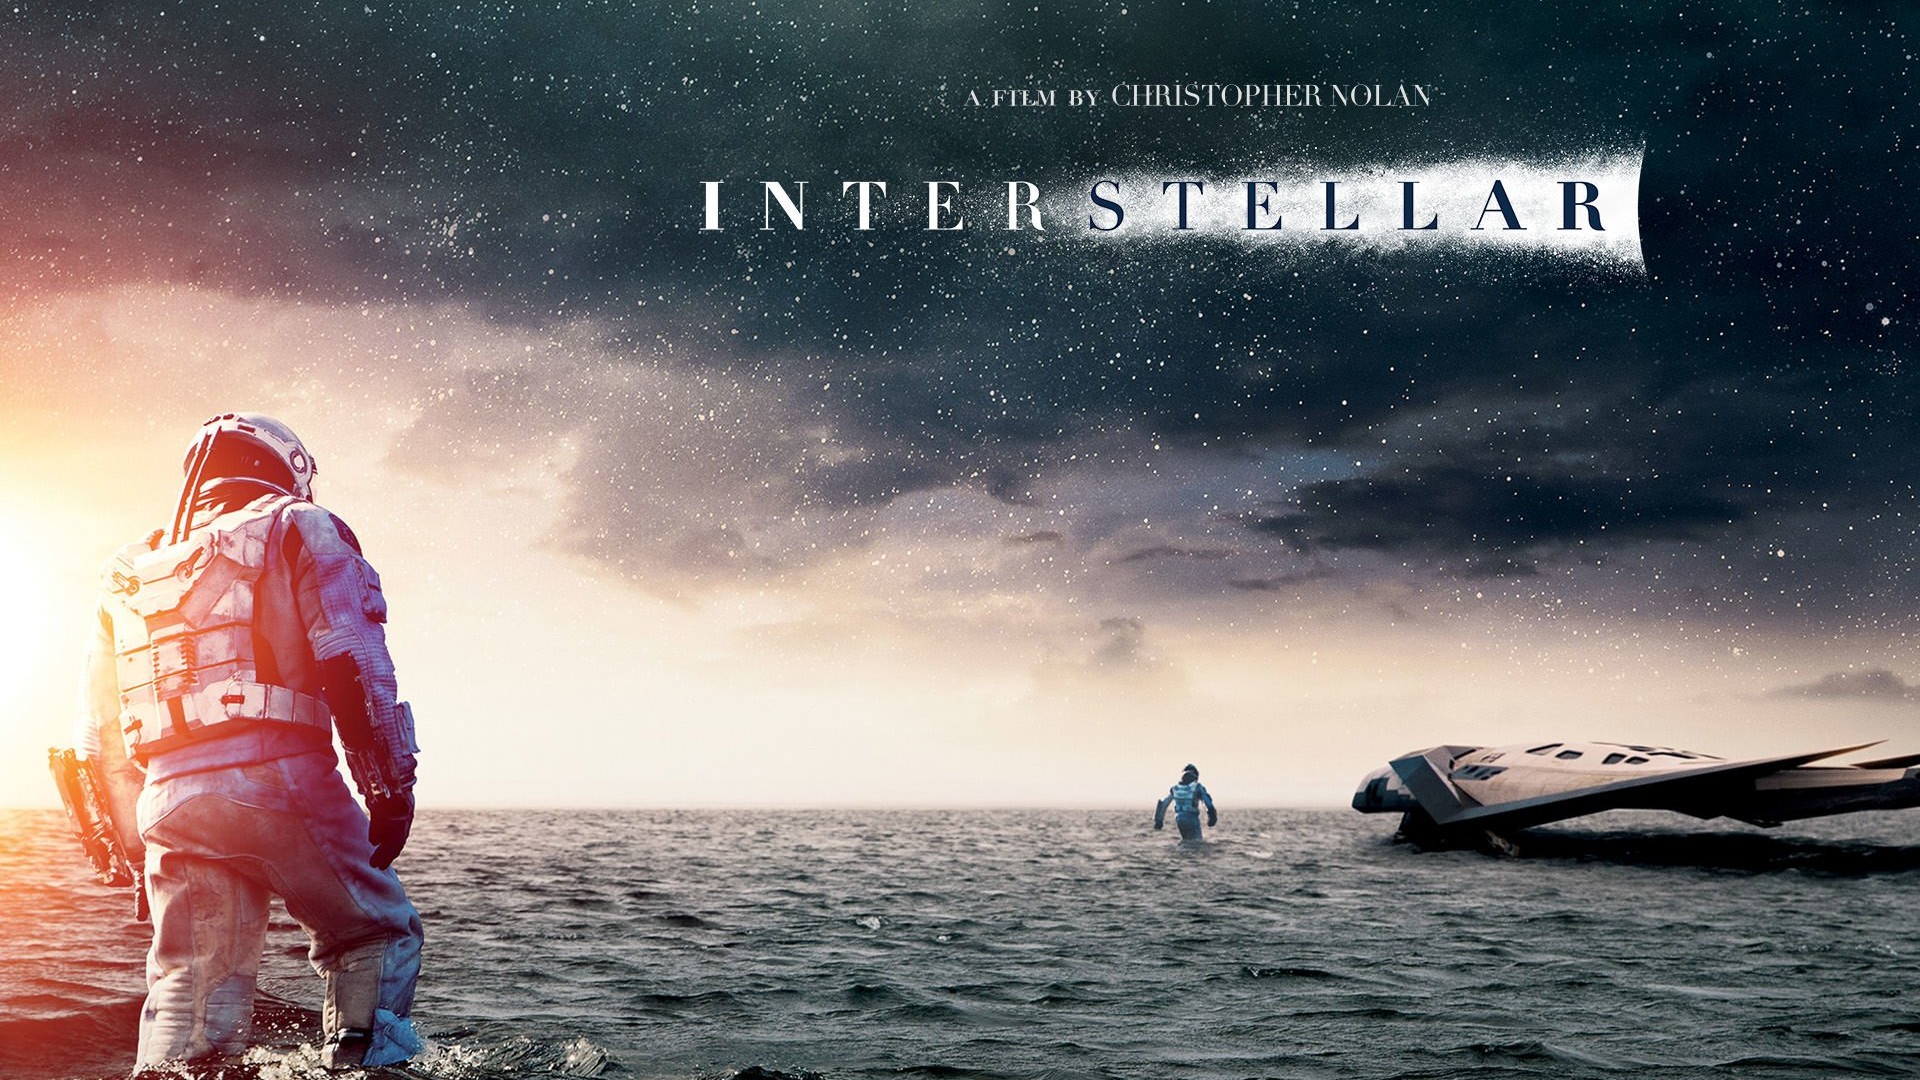 Interstellar The Movie Wallpaper for Desktop 1920x1080